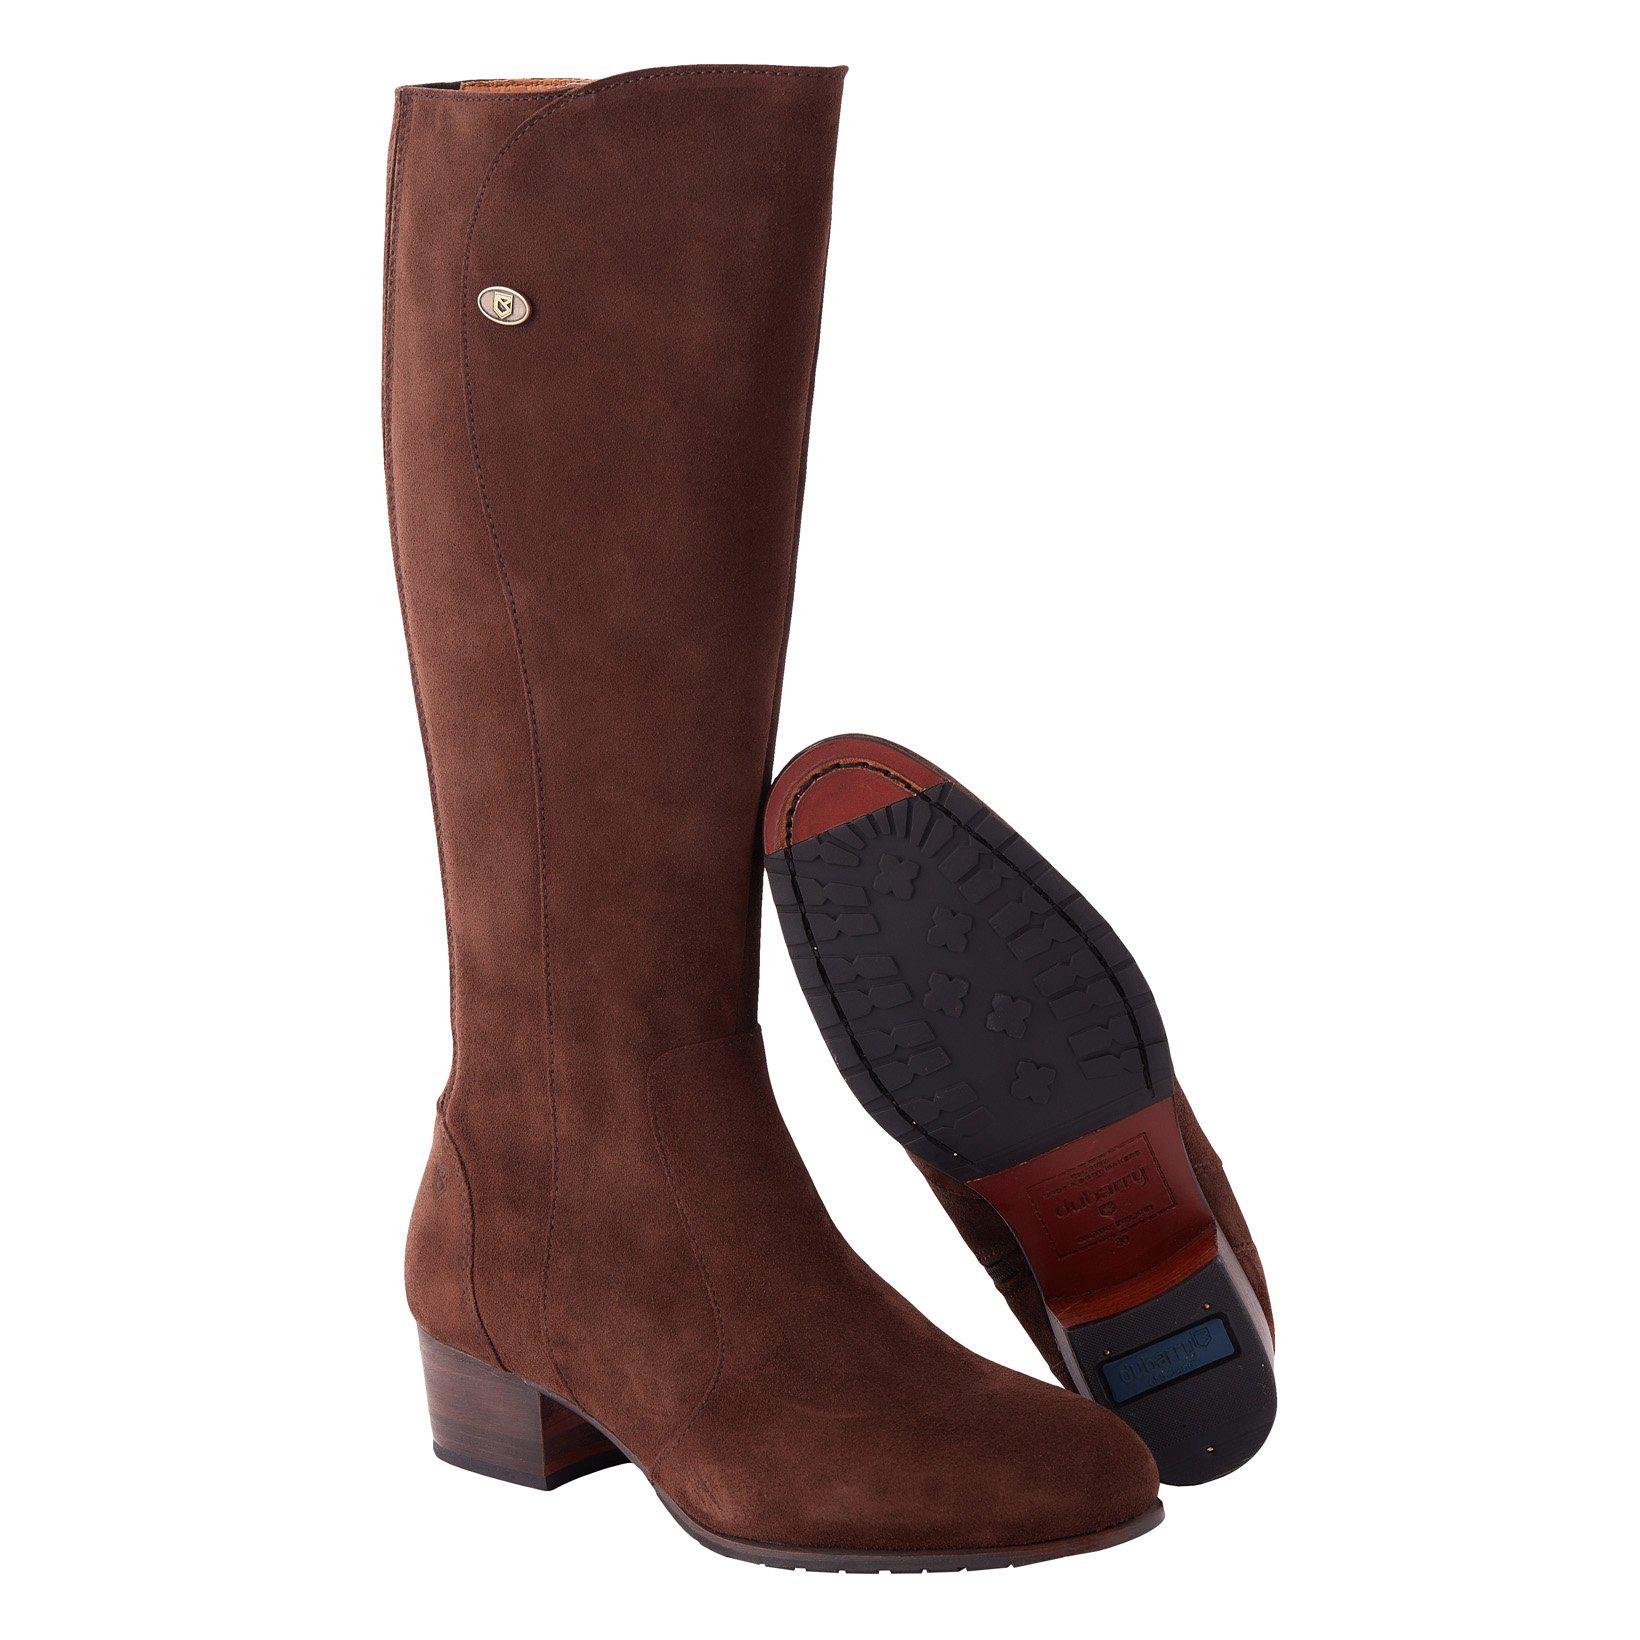 Downpatrick High Leather Boot-Dubarry-Conrad Hasselbach Shoes & Garment